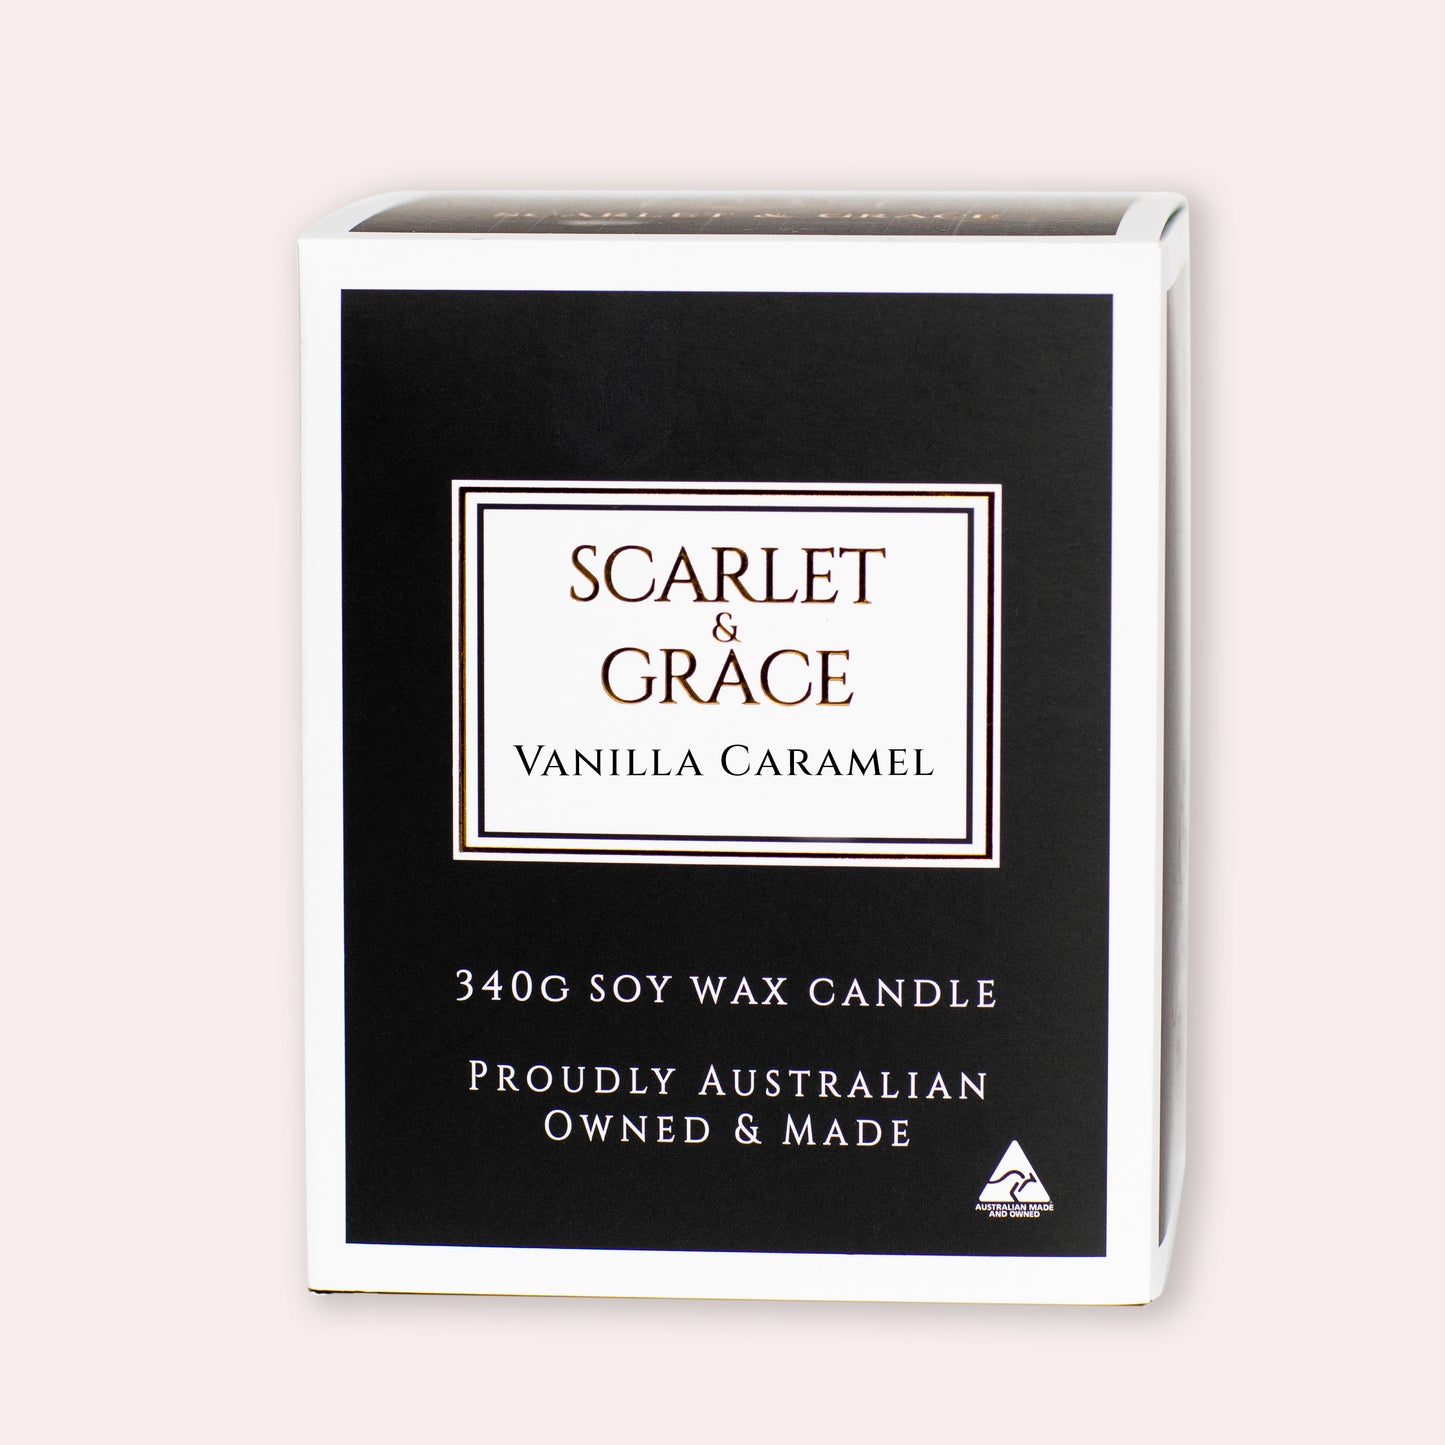 Vanilla Caramel - 340gm Soy Wax Candle - Scarlet & Grace